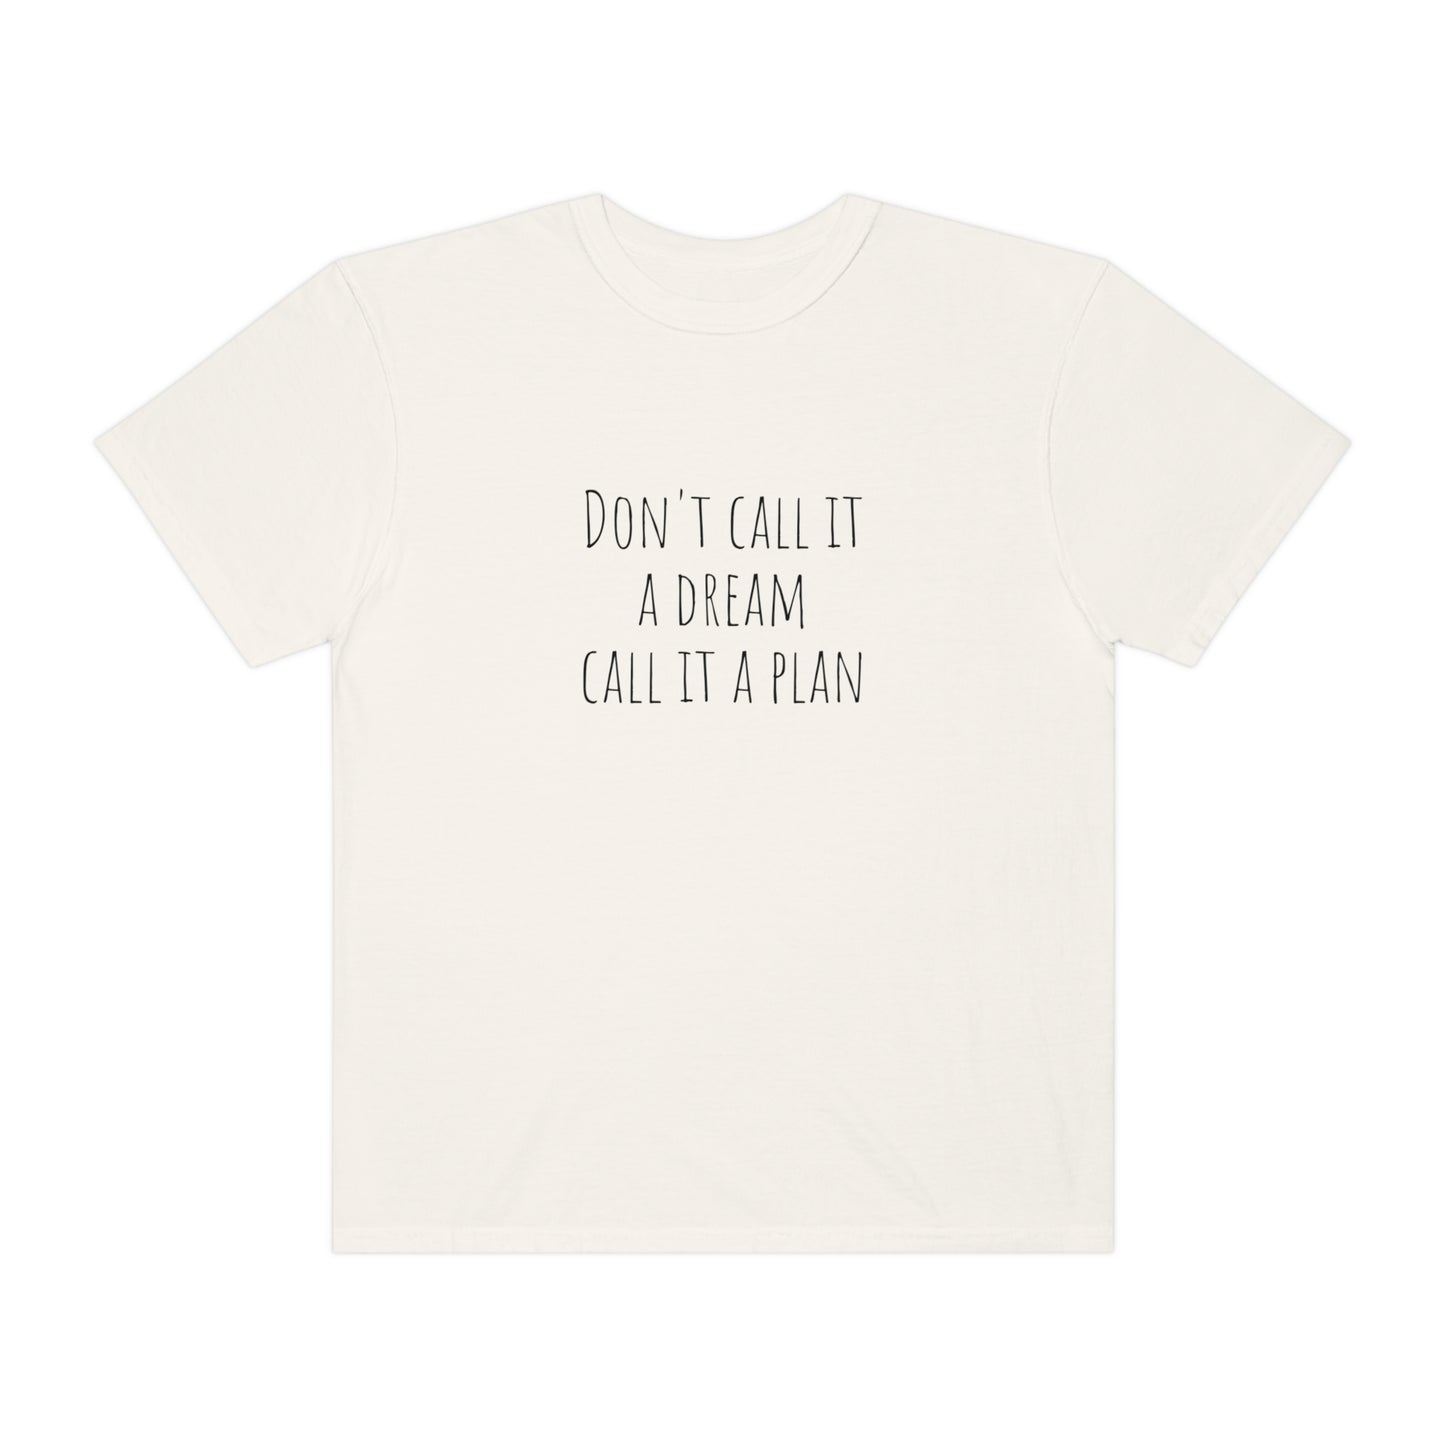 Don’t call it a dream call it a plan T-shirt